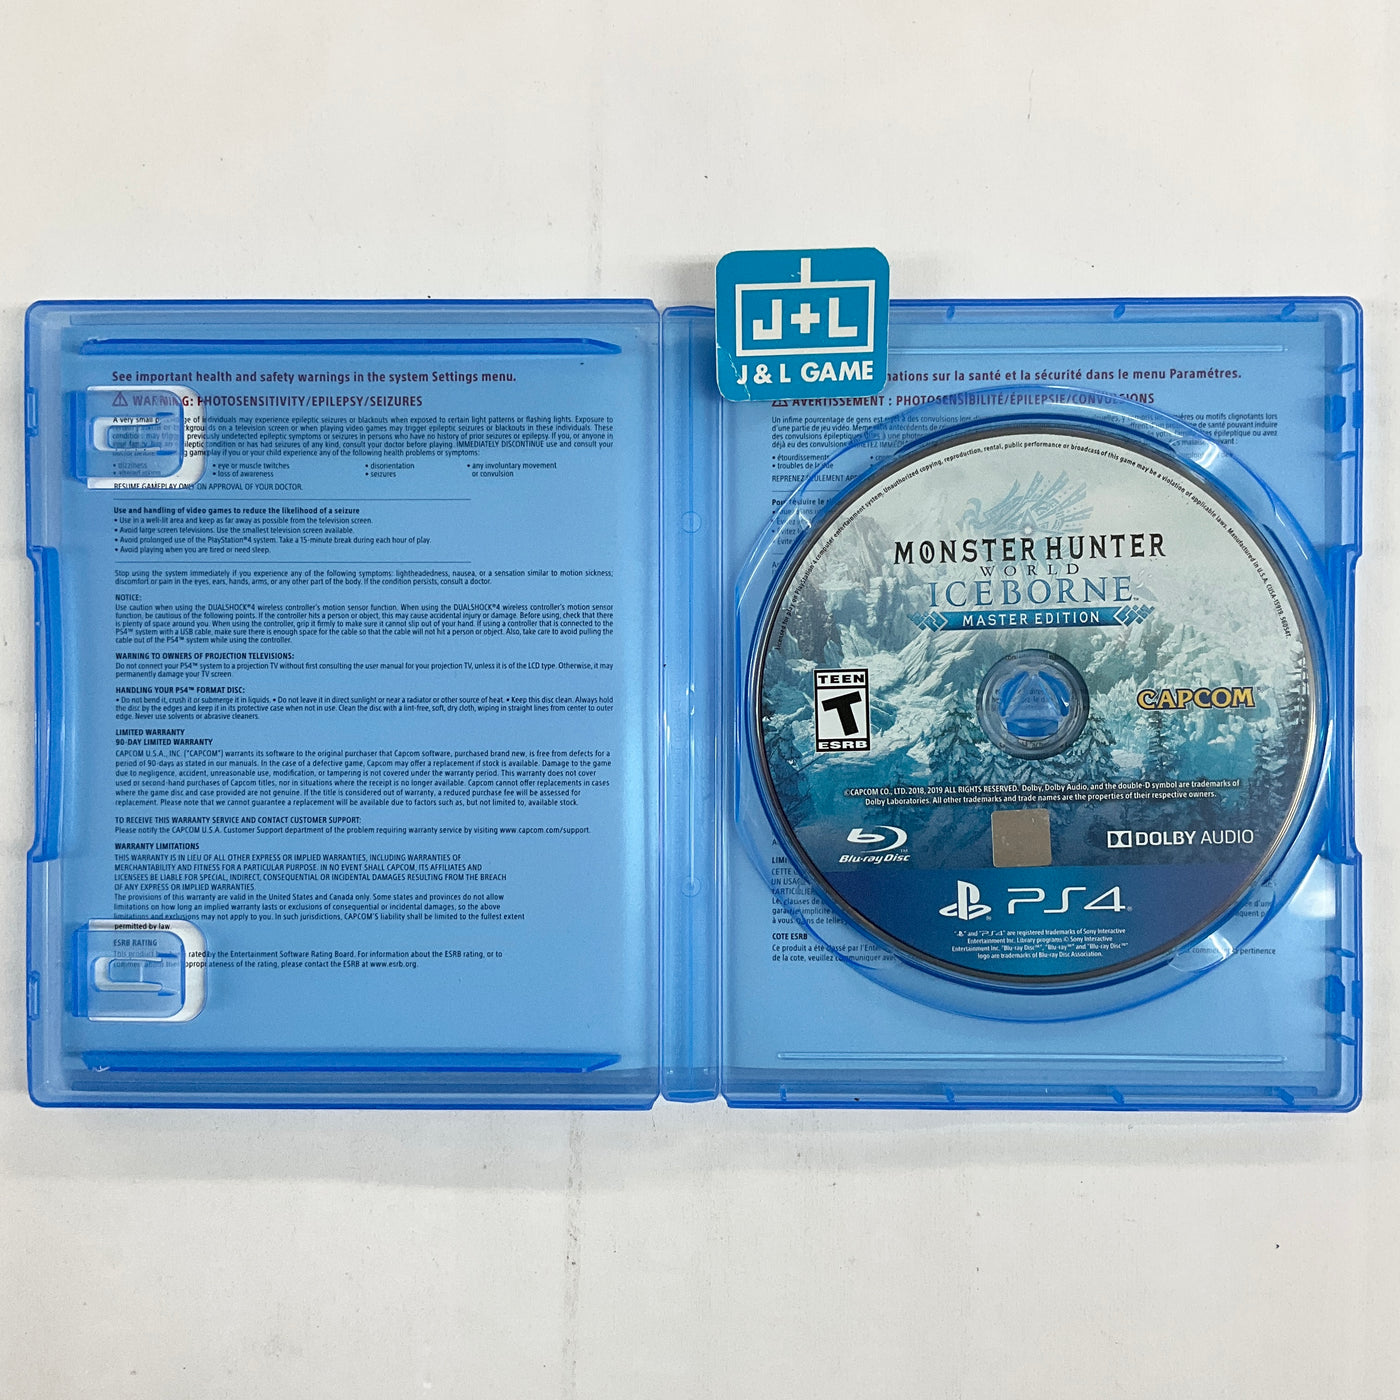 Monster Hunter Master Iceborne | Game (PS4) J&L Edition World: - PlayStation [P 4